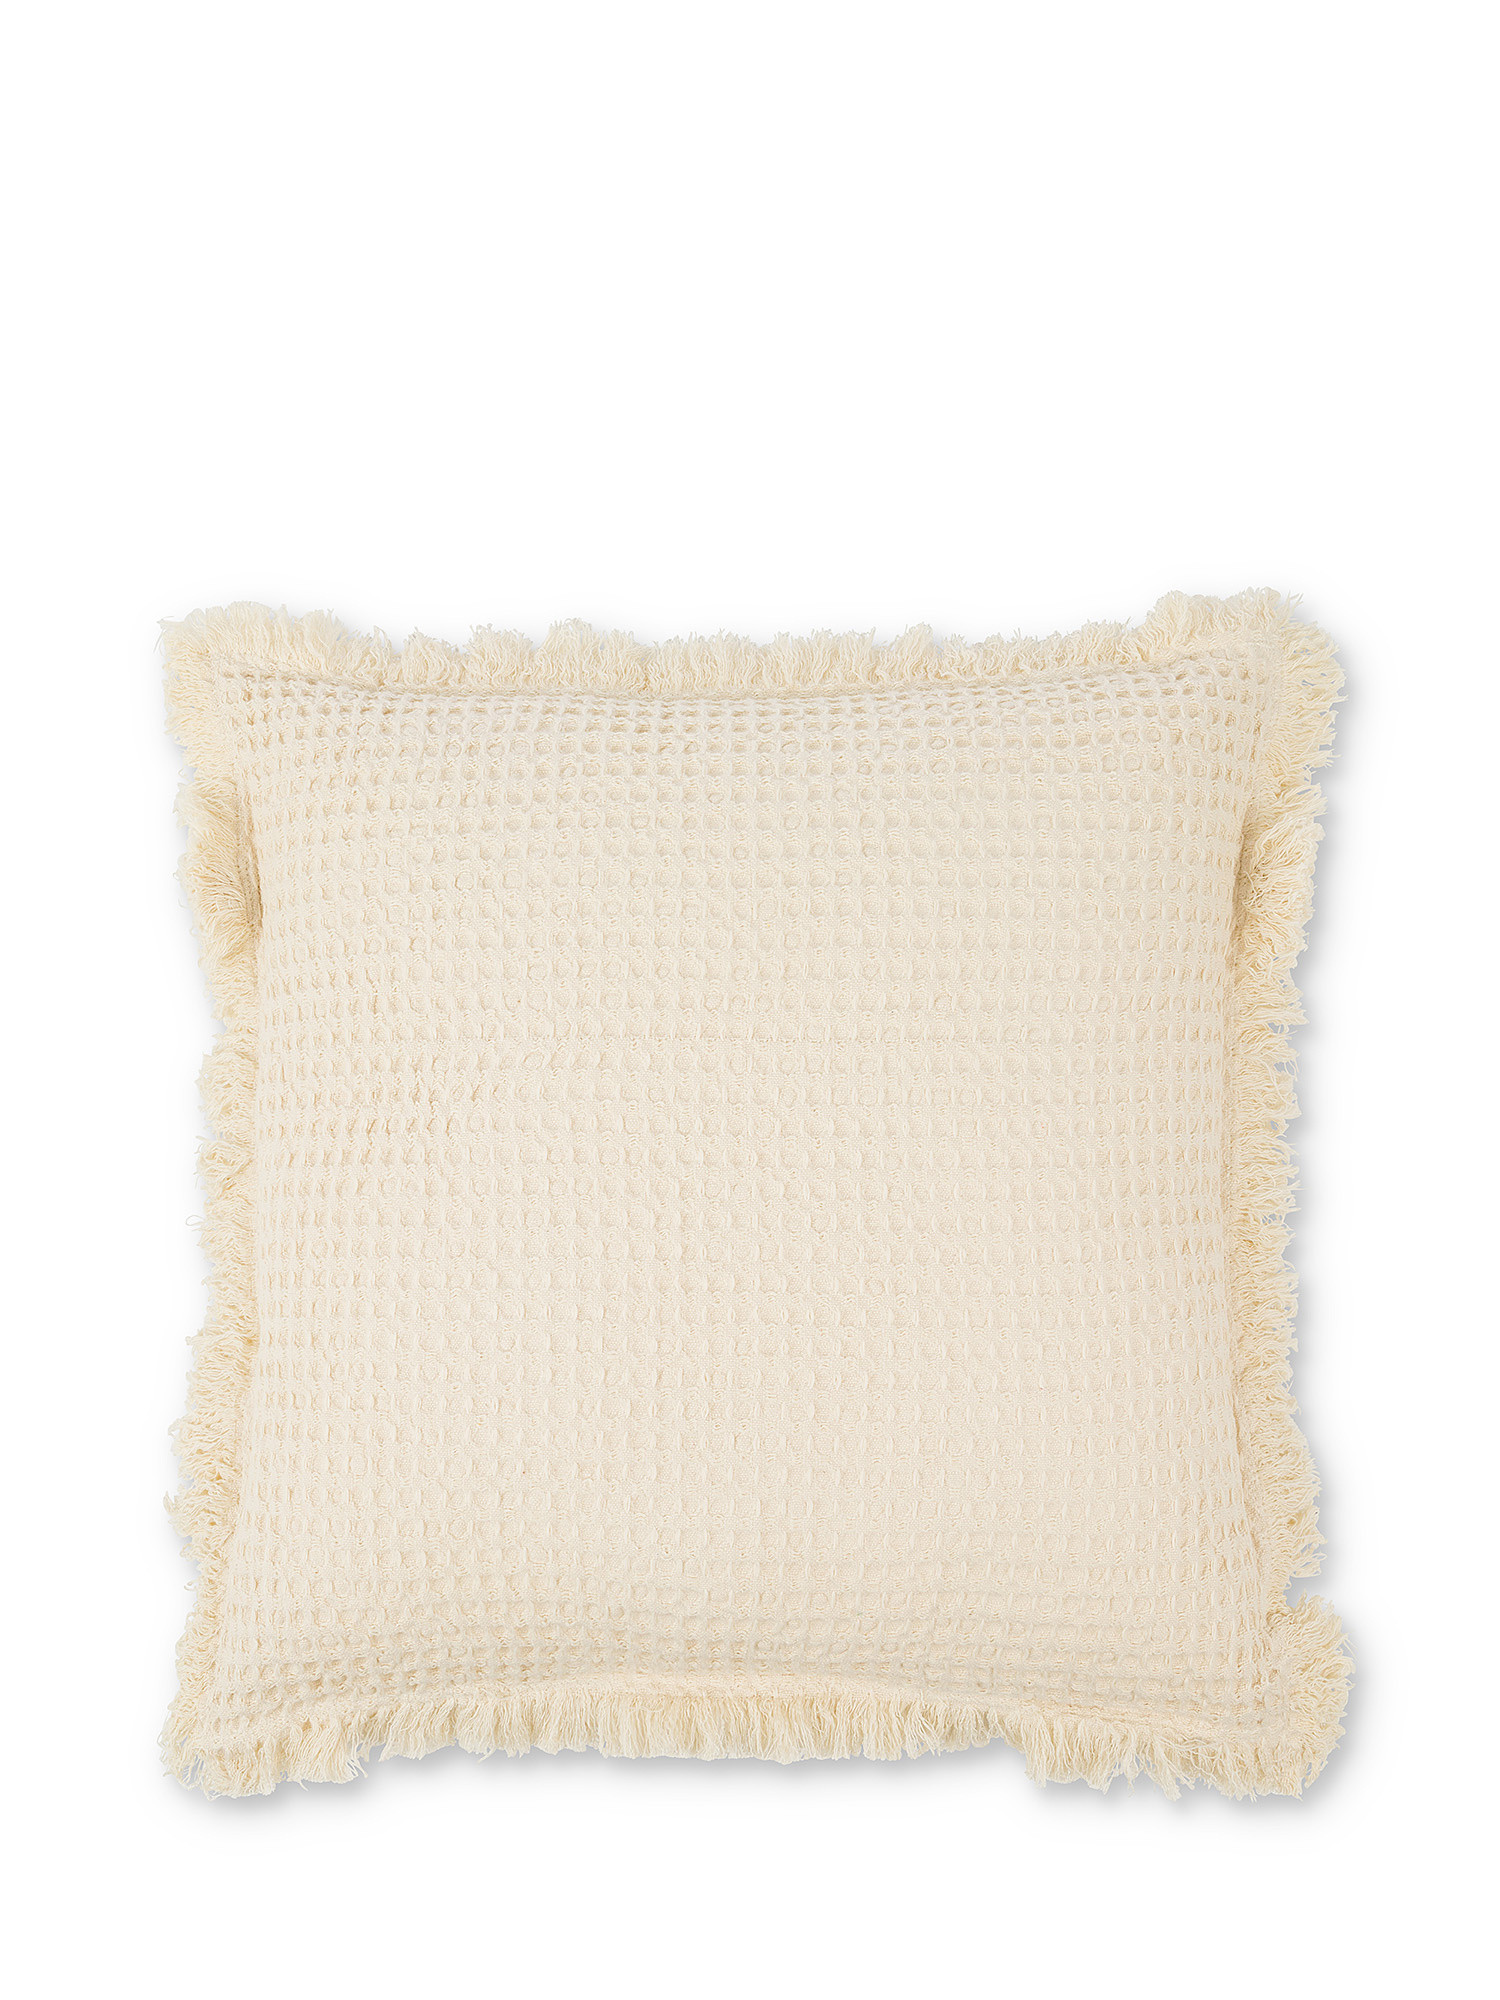 Honeycomb cotton cushion 45x45cm, Beige, large image number 0